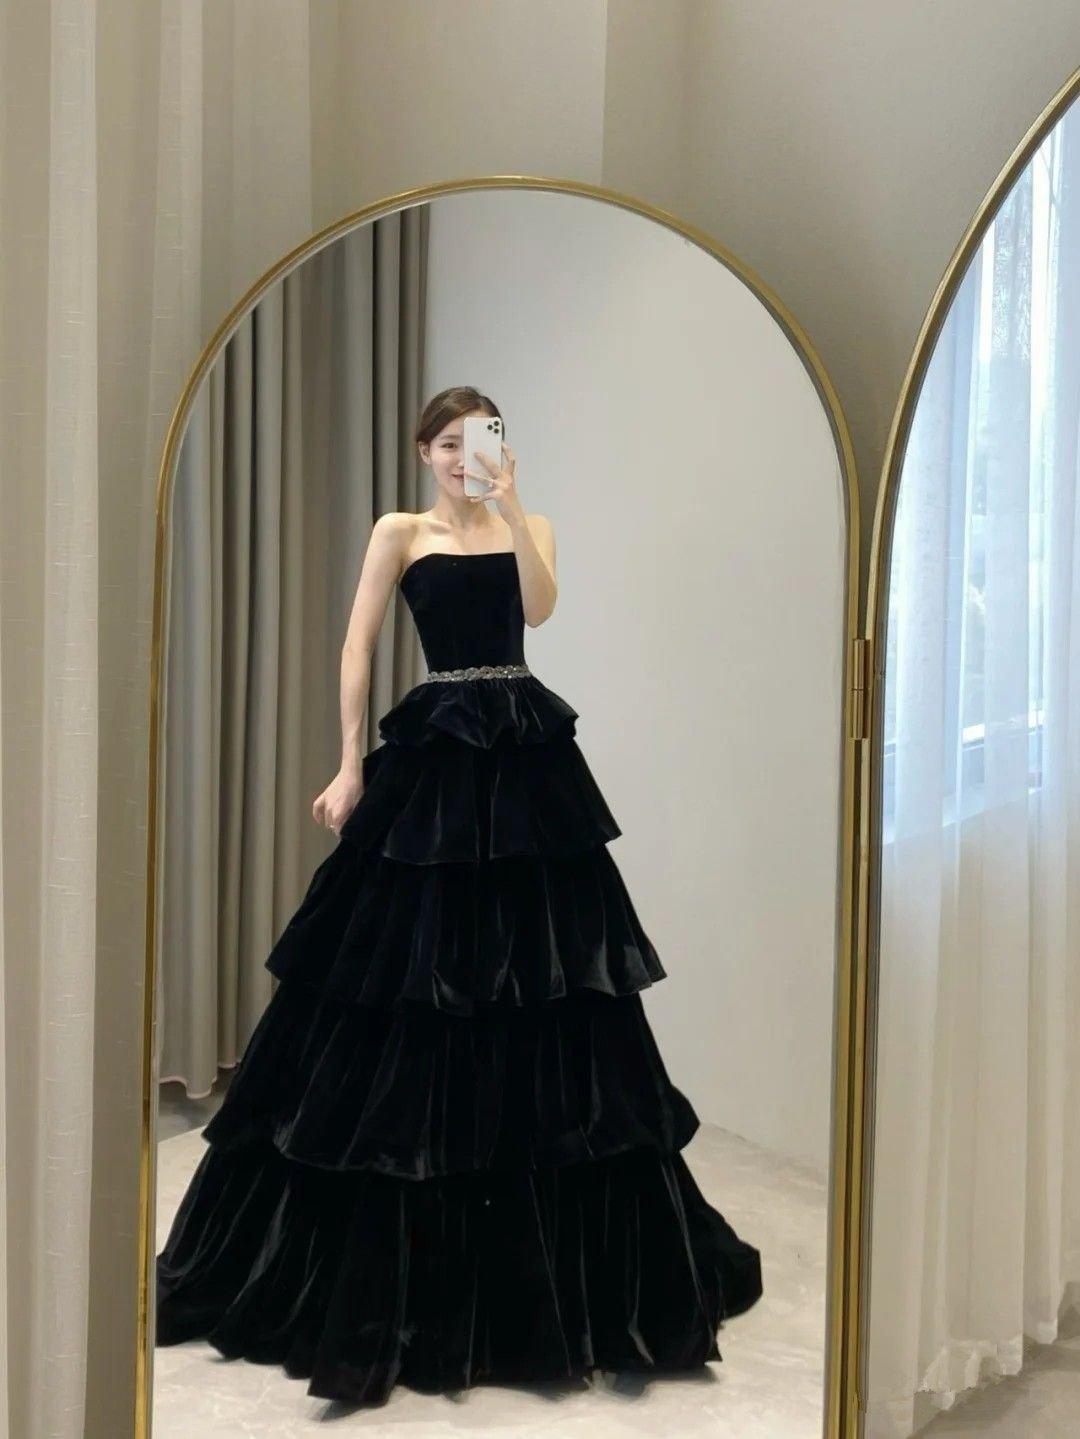 Lovely Black Dress - Strapless Dress - Maxi Dress - Gown - $72.00 - Lulus